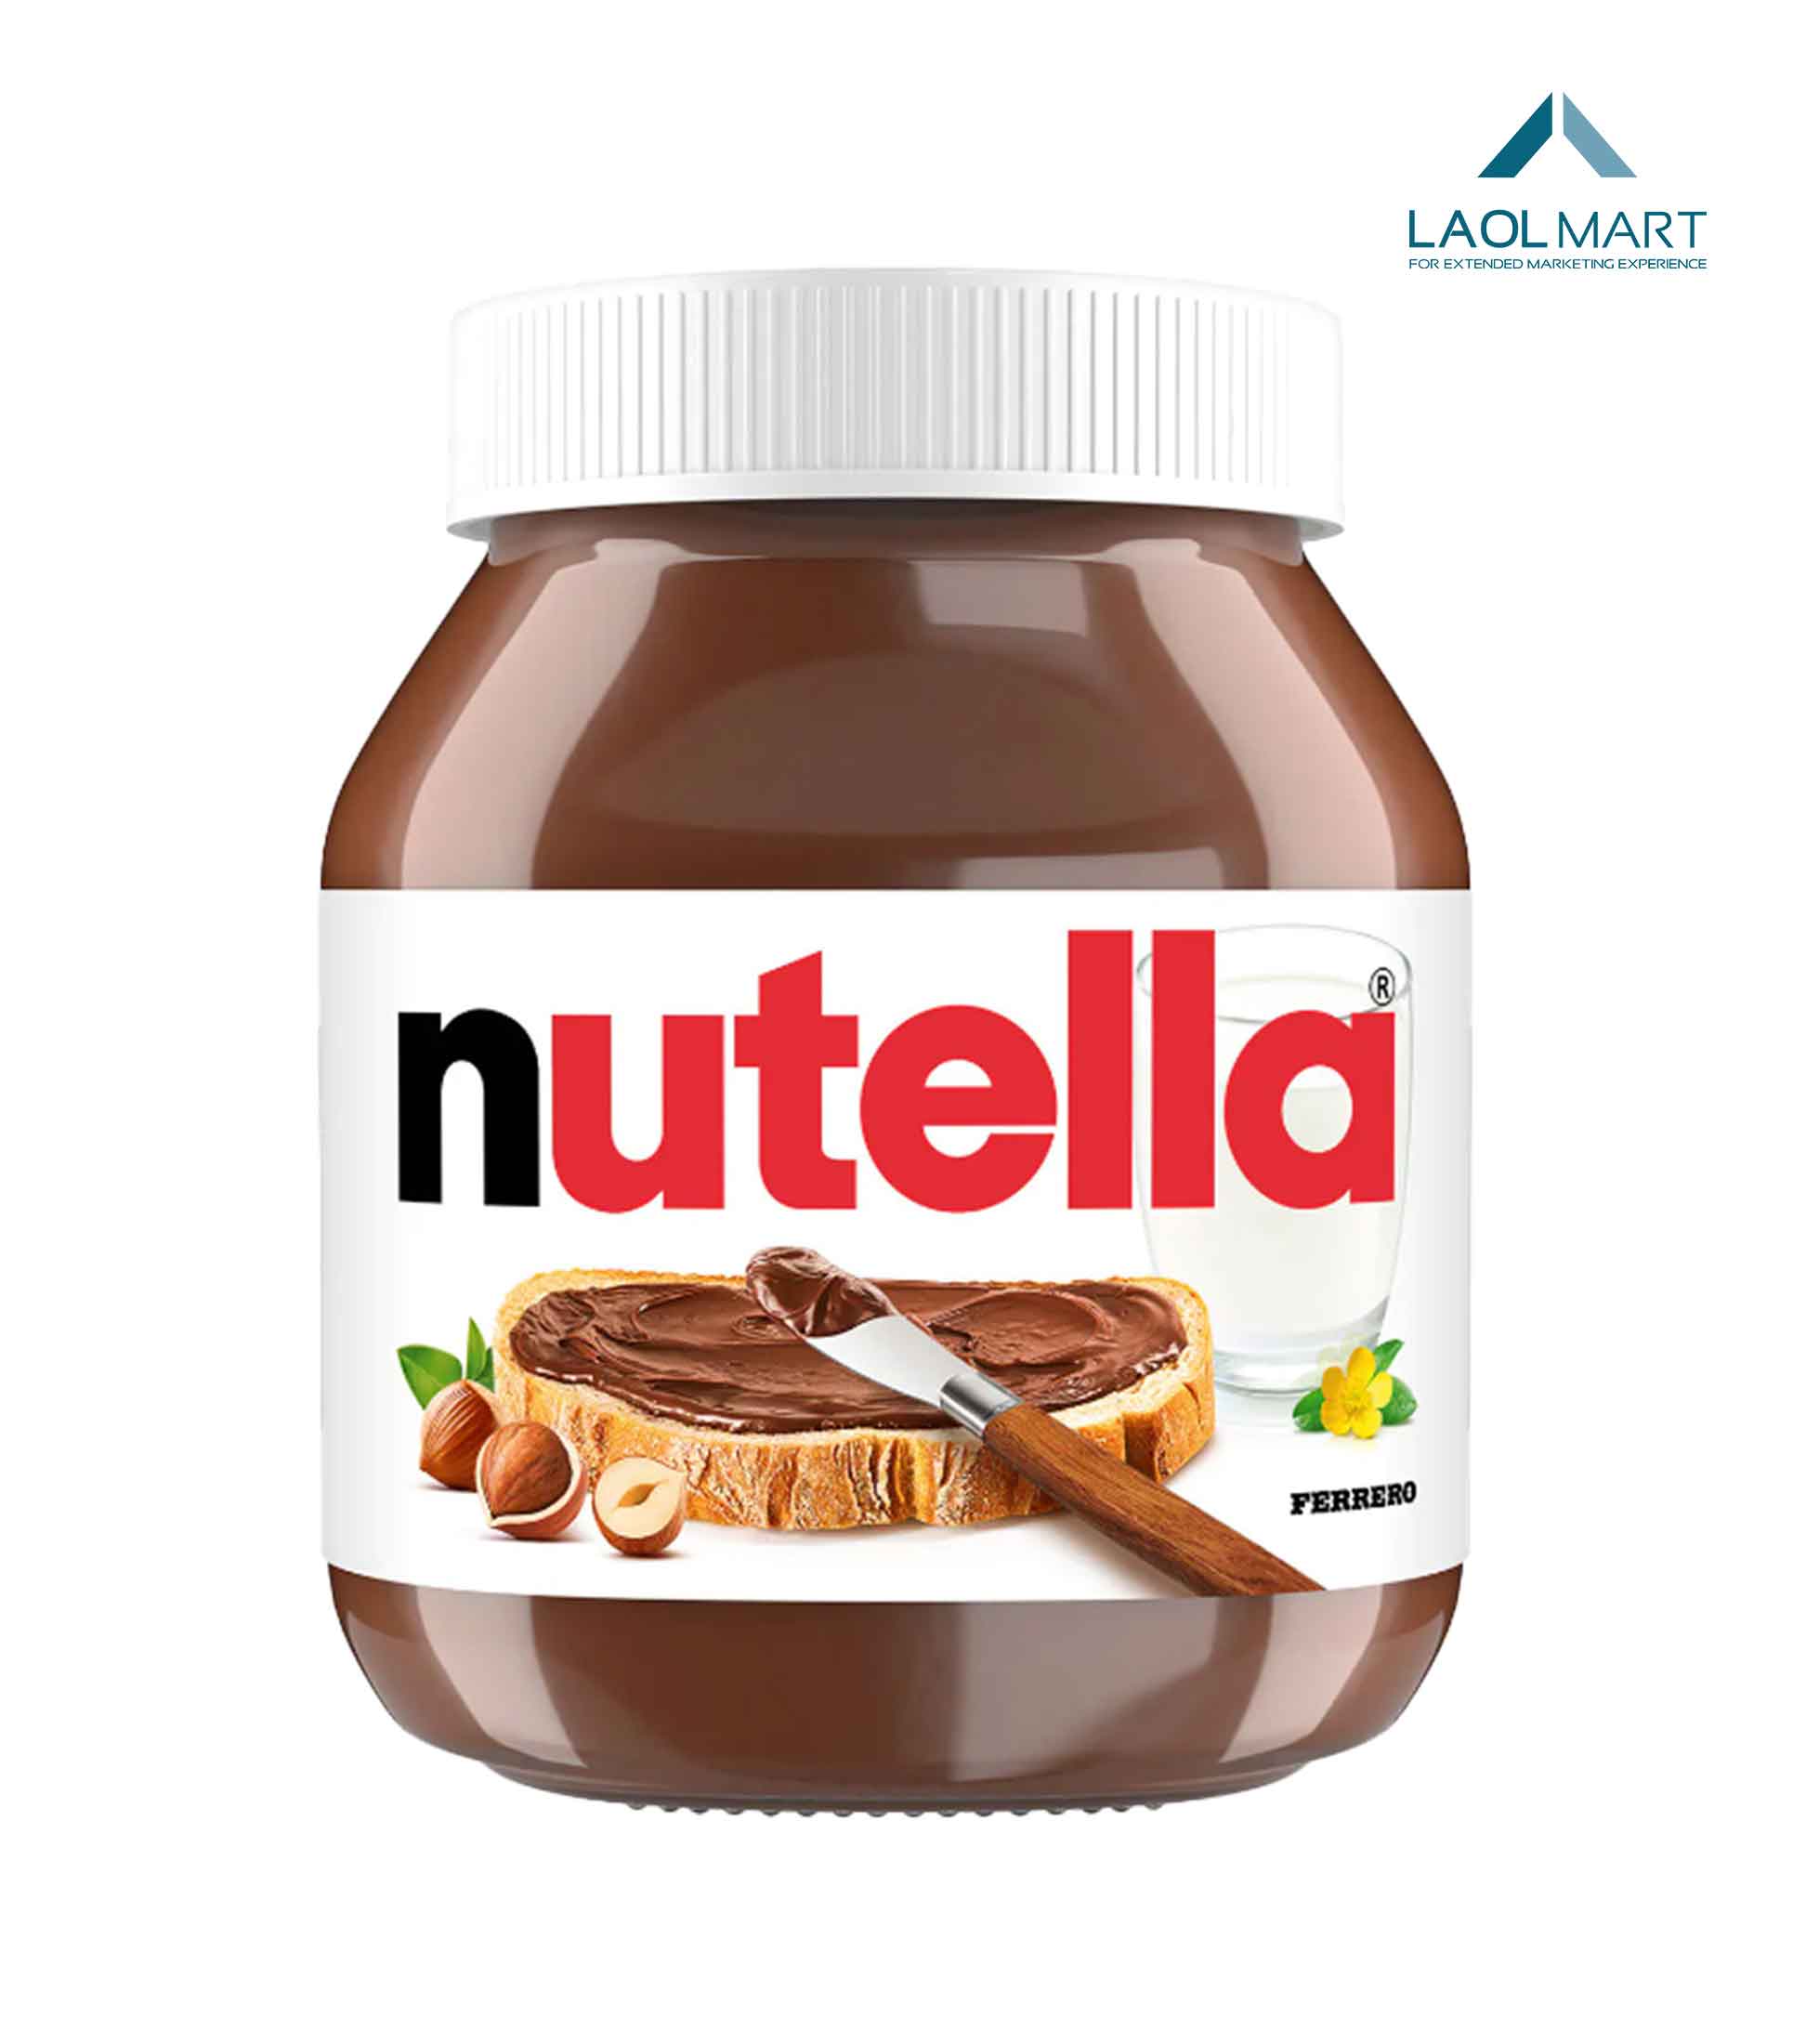 Nutella 600g - Hazelnut Spread with Cocoa